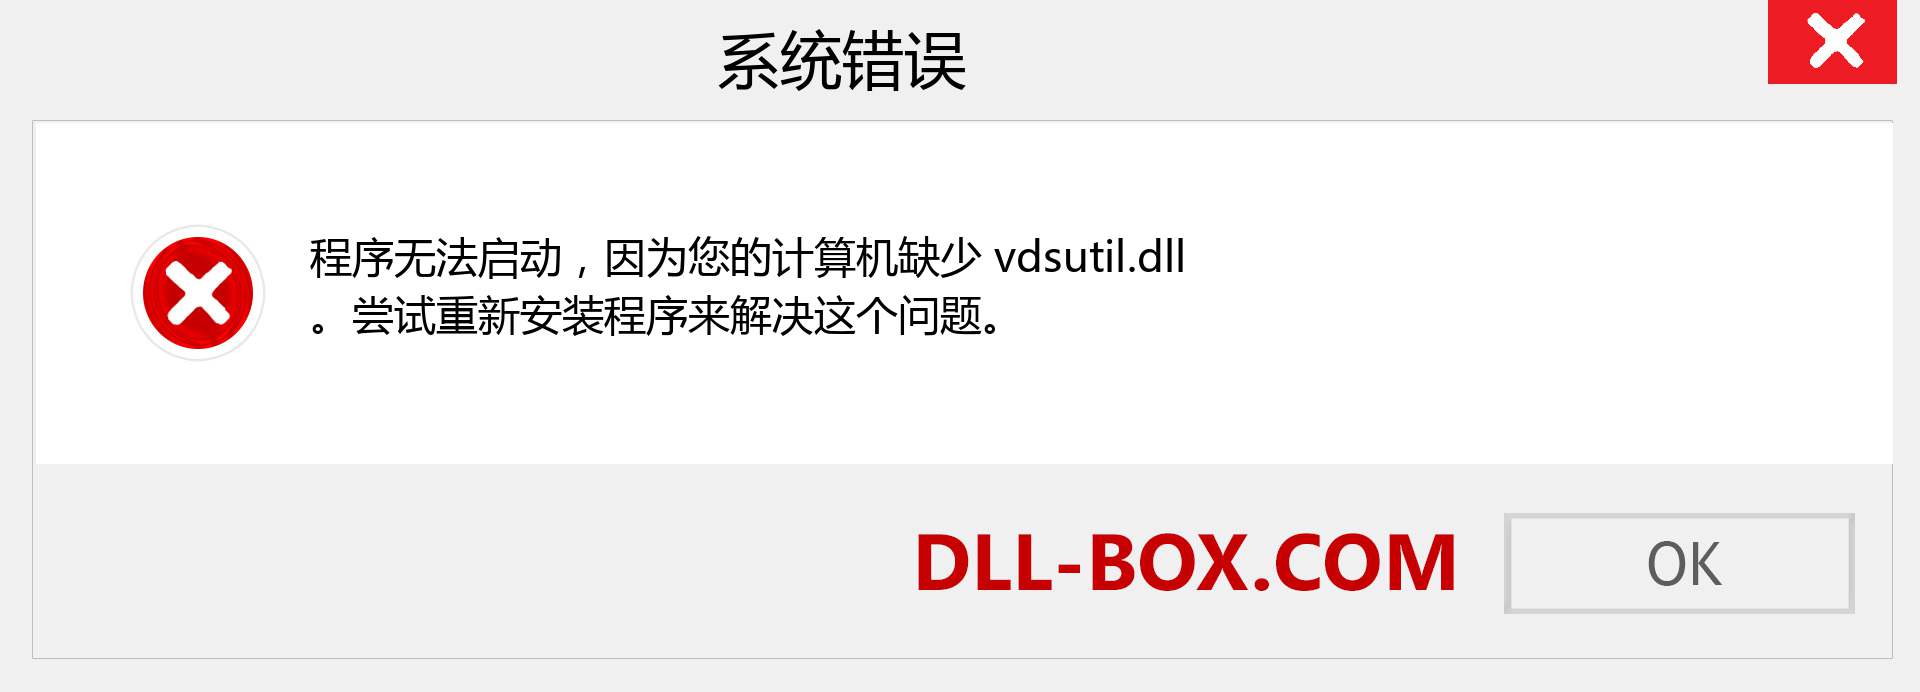 vdsutil.dll 文件丢失？。 适用于 Windows 7、8、10 的下载 - 修复 Windows、照片、图像上的 vdsutil dll 丢失错误